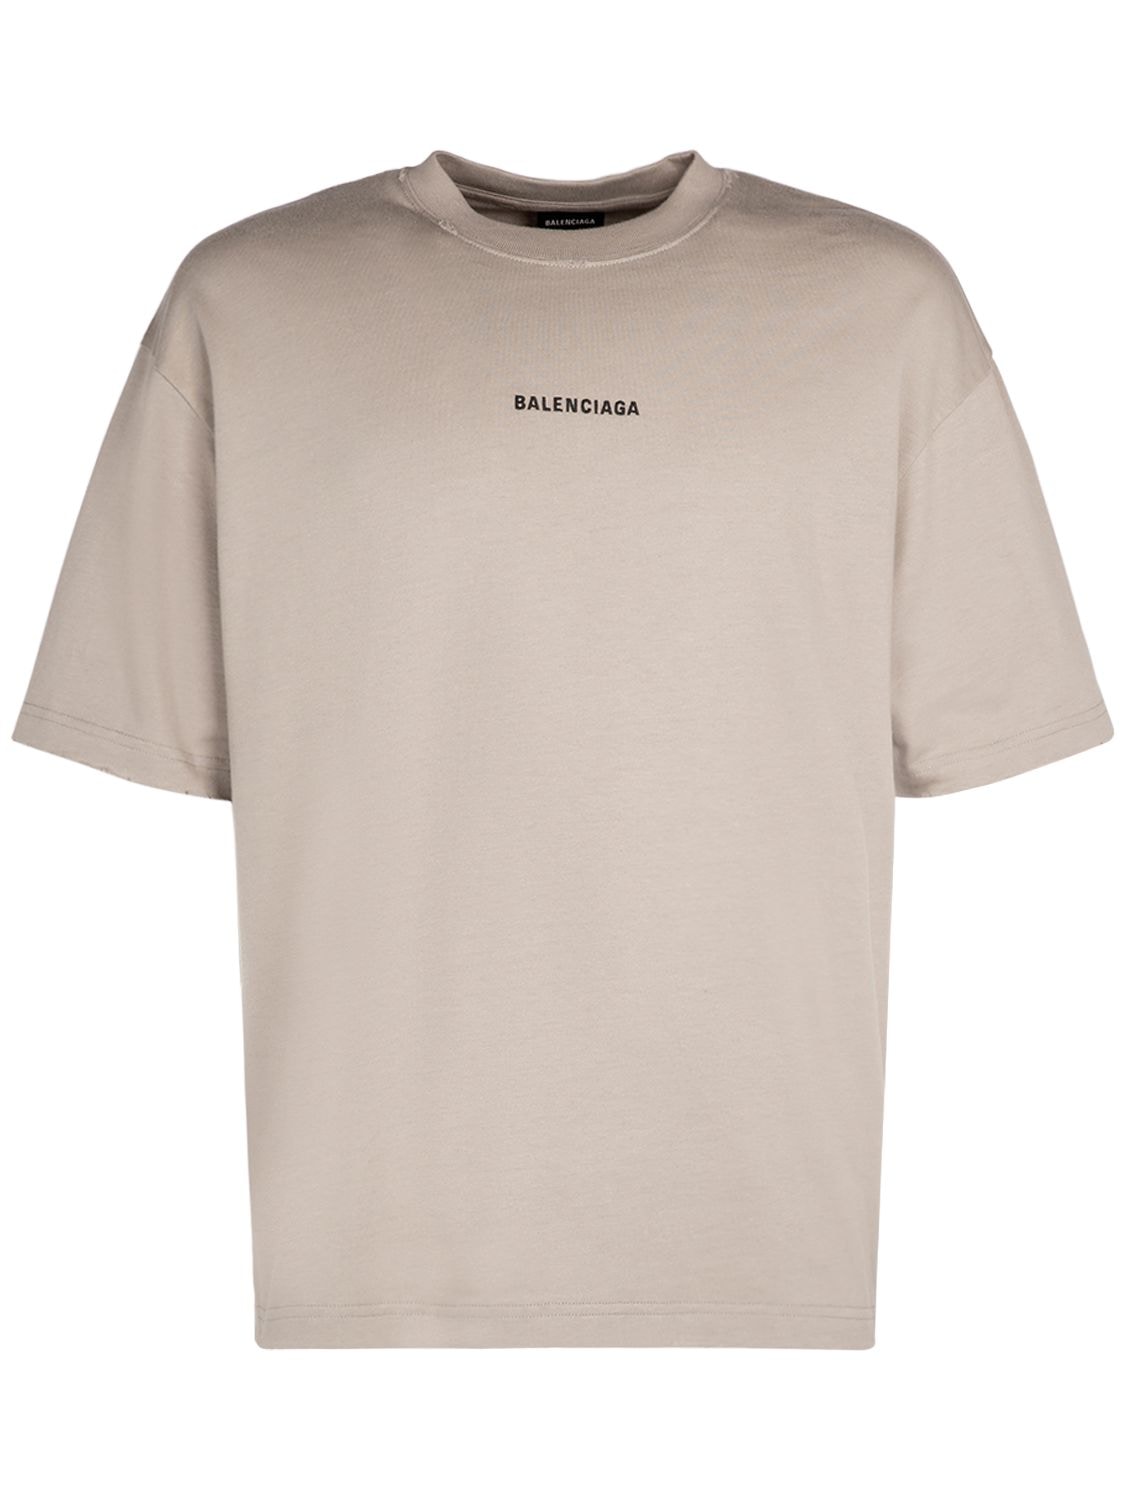 Vintage Effect Cotton Jersey T-shirt – MEN > CLOTHING > T-SHIRTS